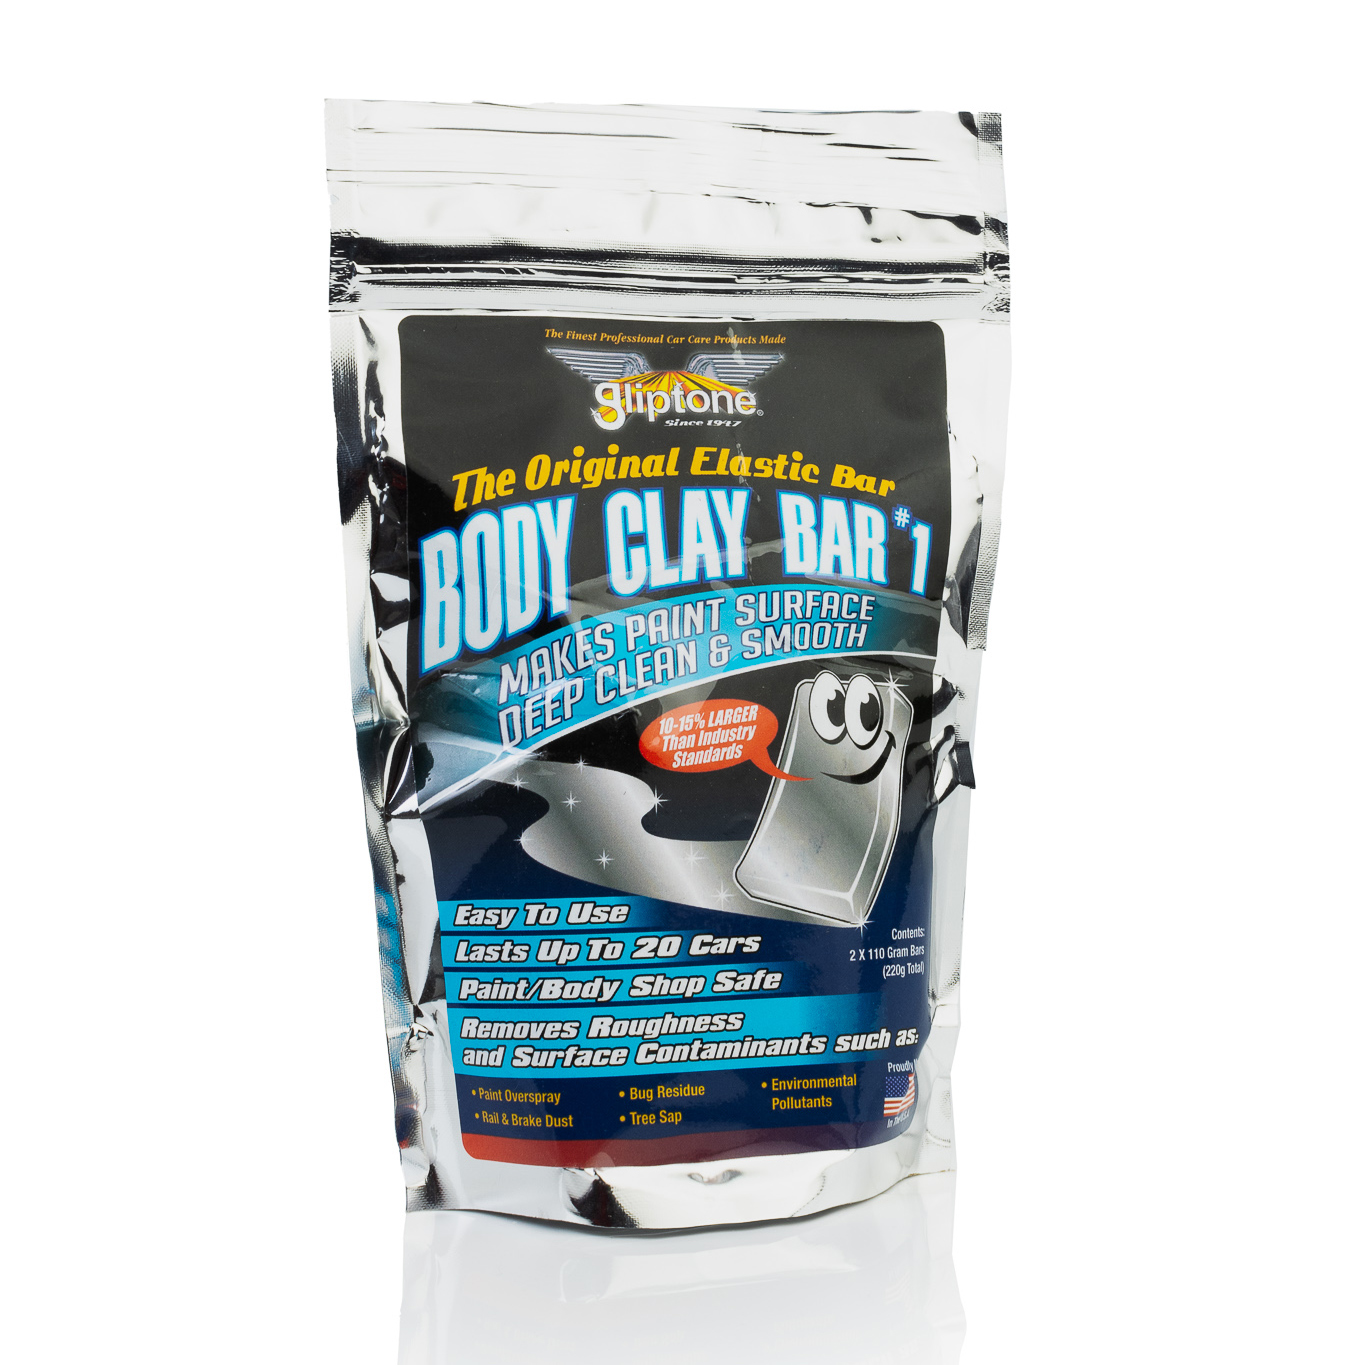 Body Clay Bar - Gliptone Europe